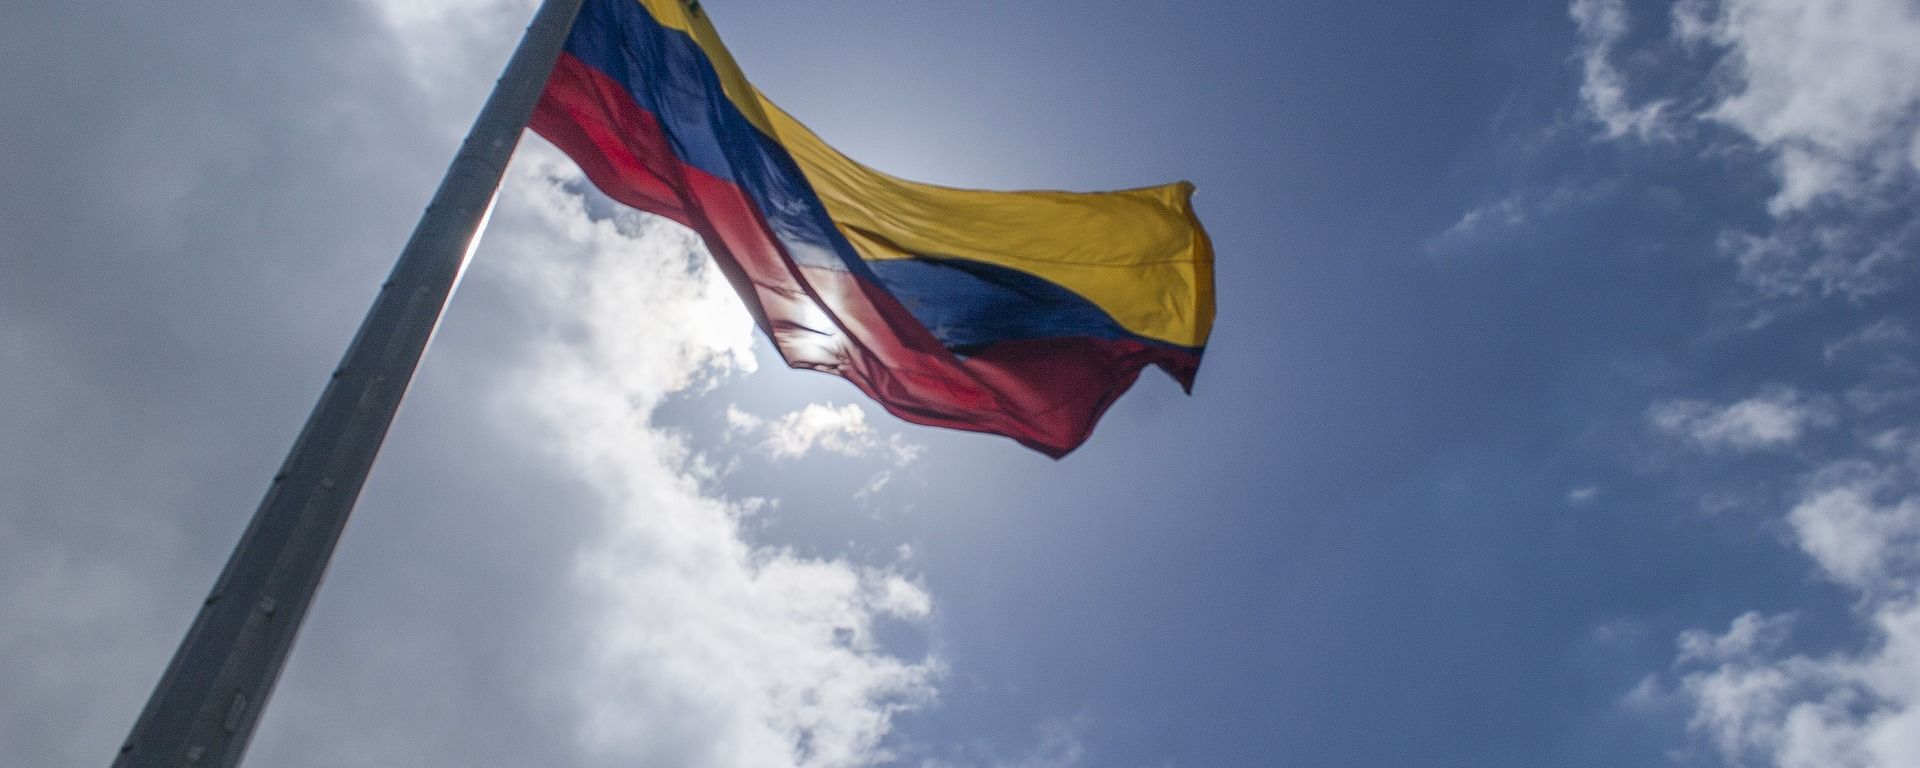 Bandera de Venezuela - Sputnik Mundo, 1920, 10.03.2021